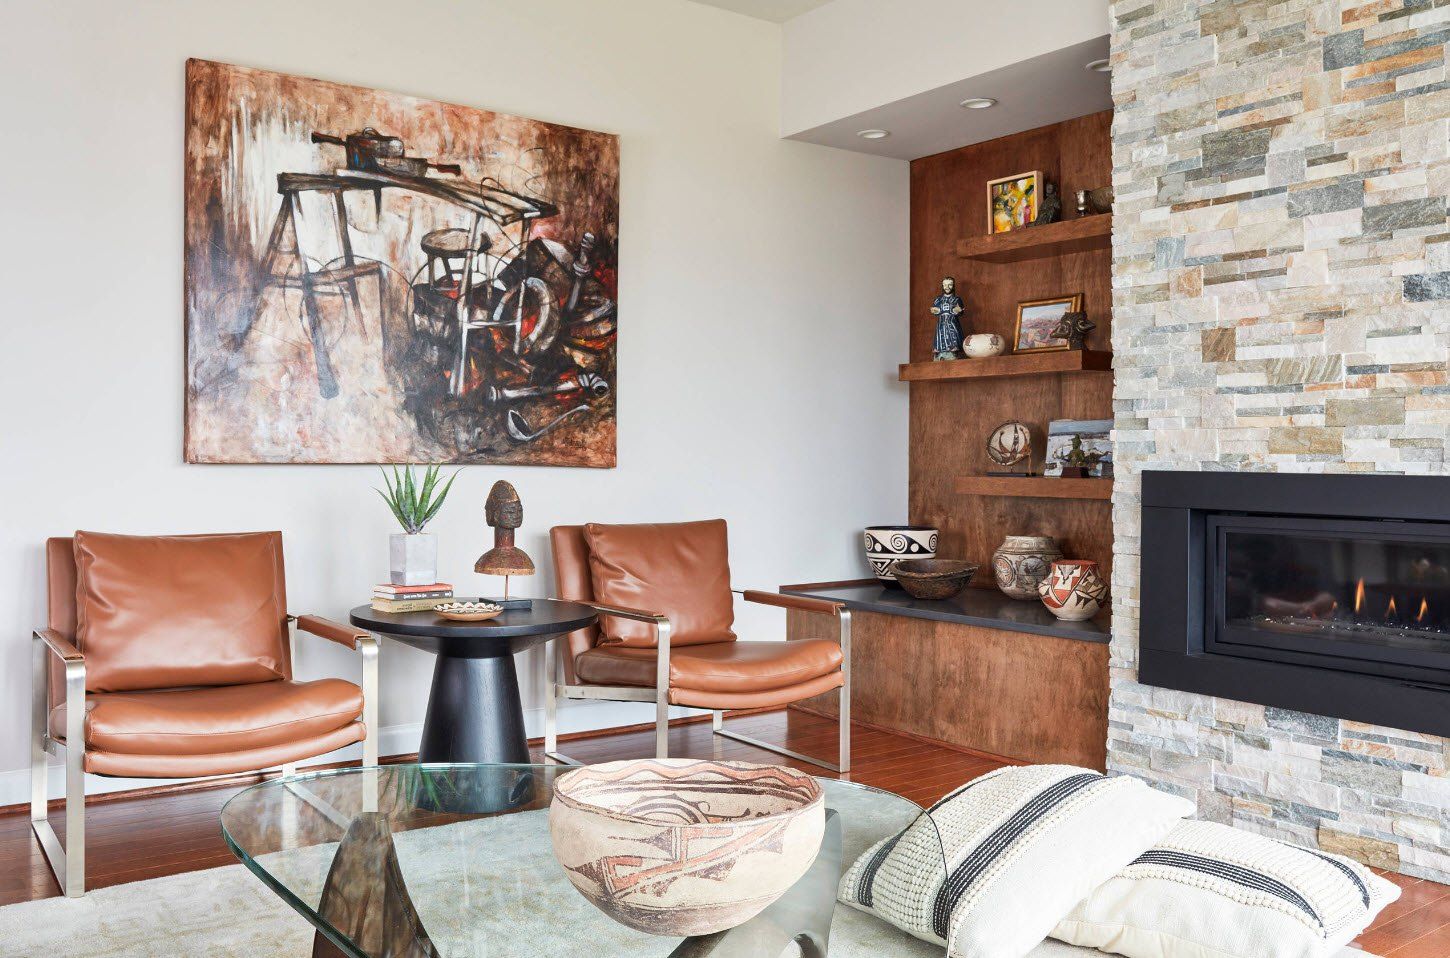 150 sq ft living room ideas